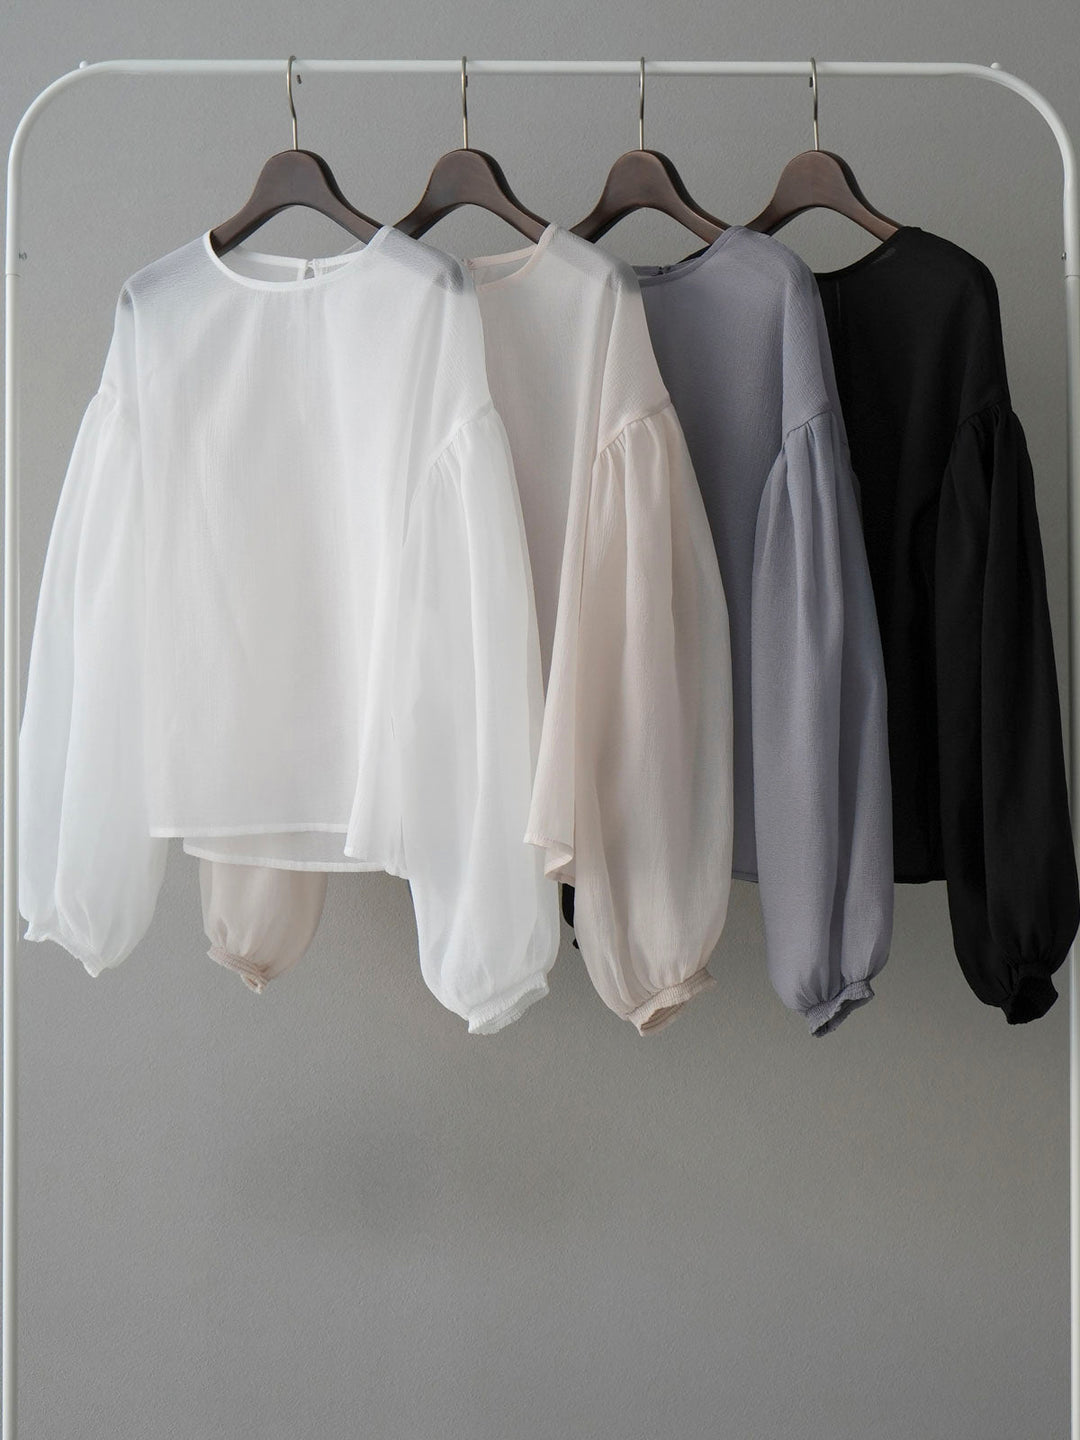 [SET] 捲袖水洗透明上衣 + 捲袖水洗透明上衣 (2set)